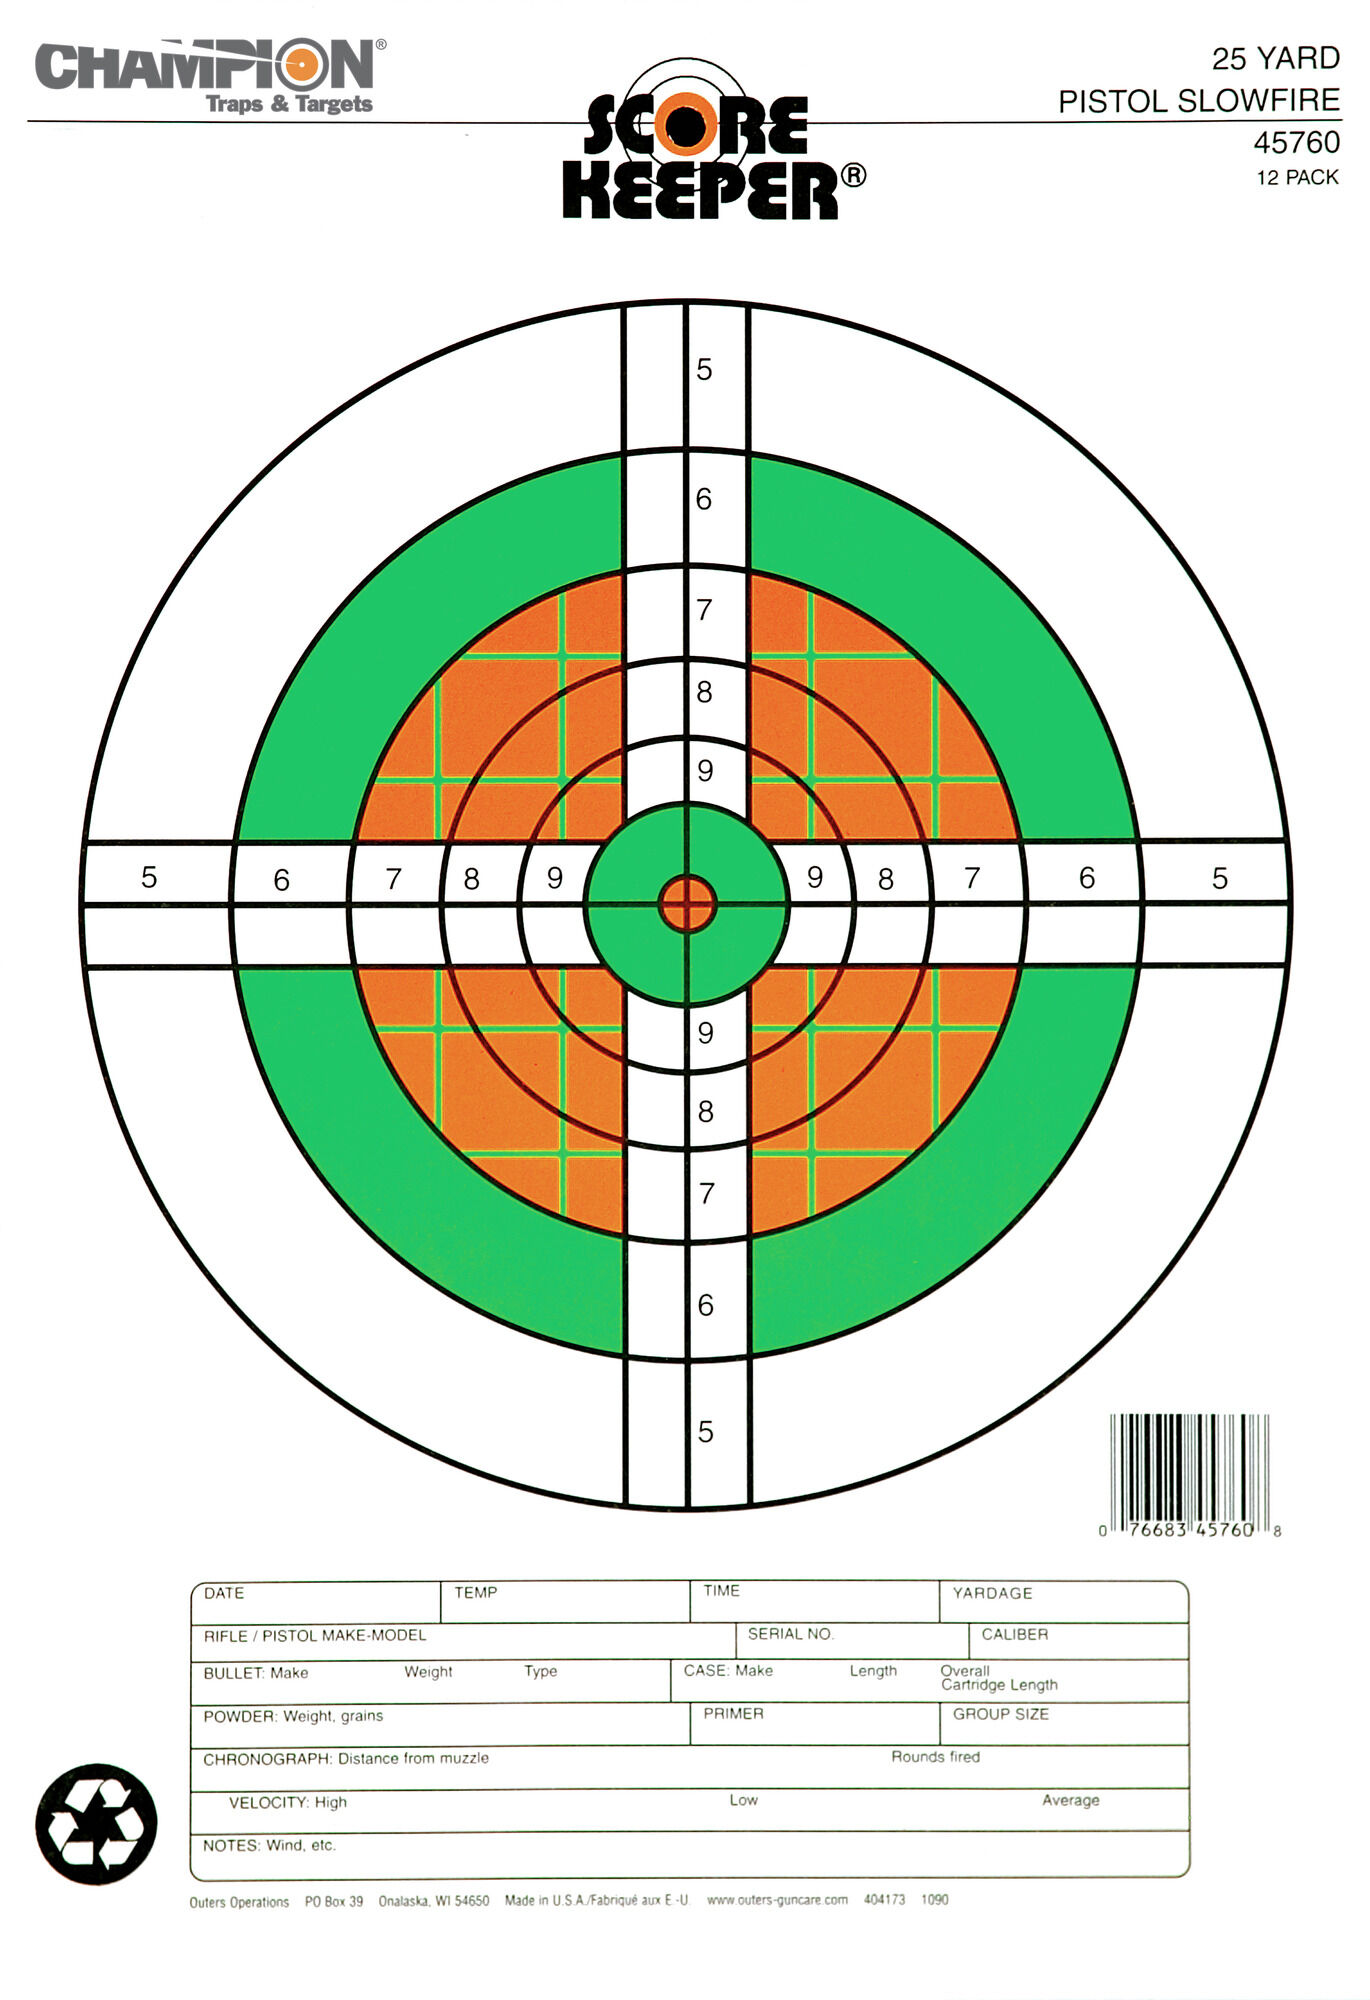 12 Champion Score Keeper 100 Yard Rifle Sighting In Targets FL Green Orange 